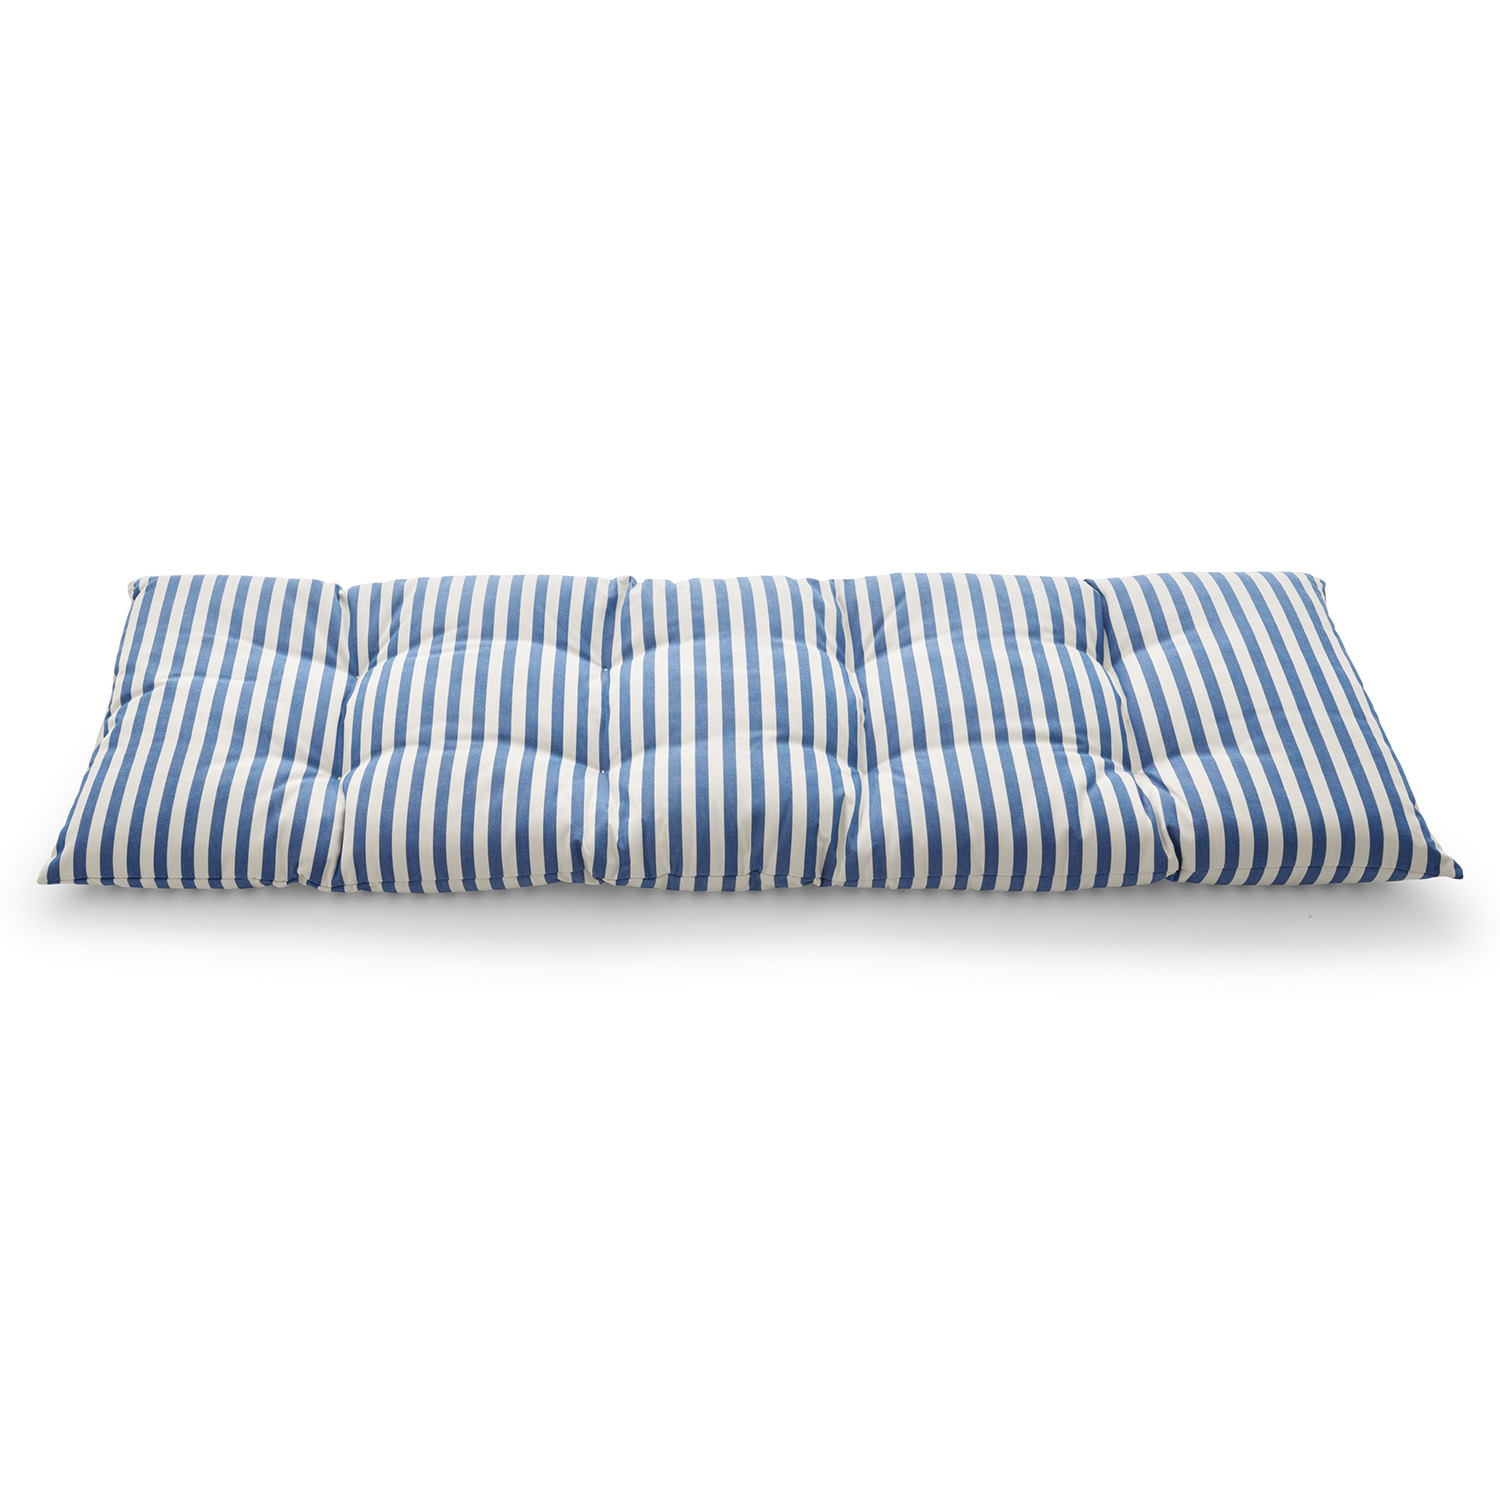 Skagerak Barriere Cushion 125X43 cm Sea Blue Stripe